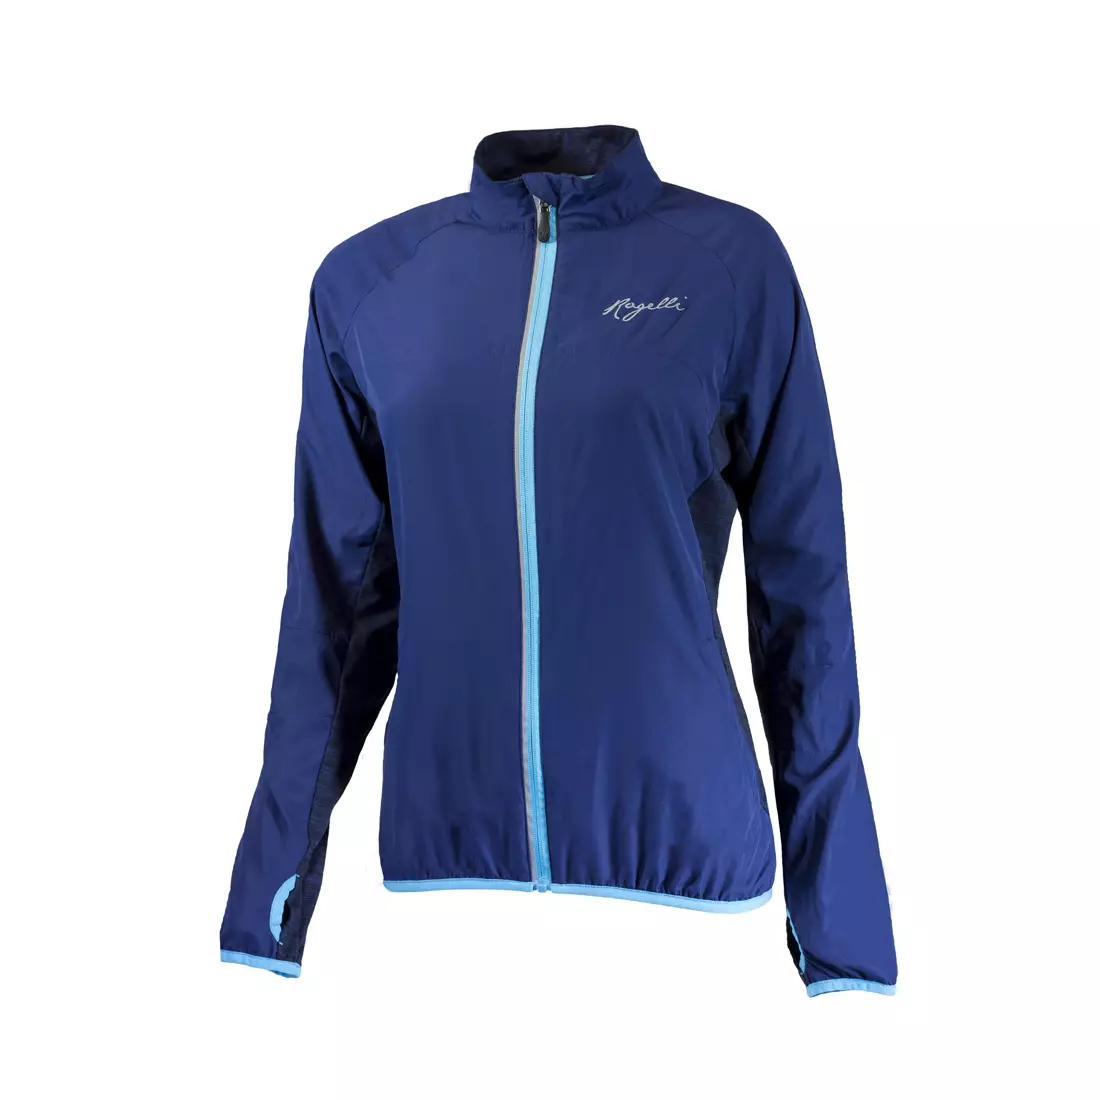 ROGELLI RUN BRIGHT 840.864 - women's running jacket, blue